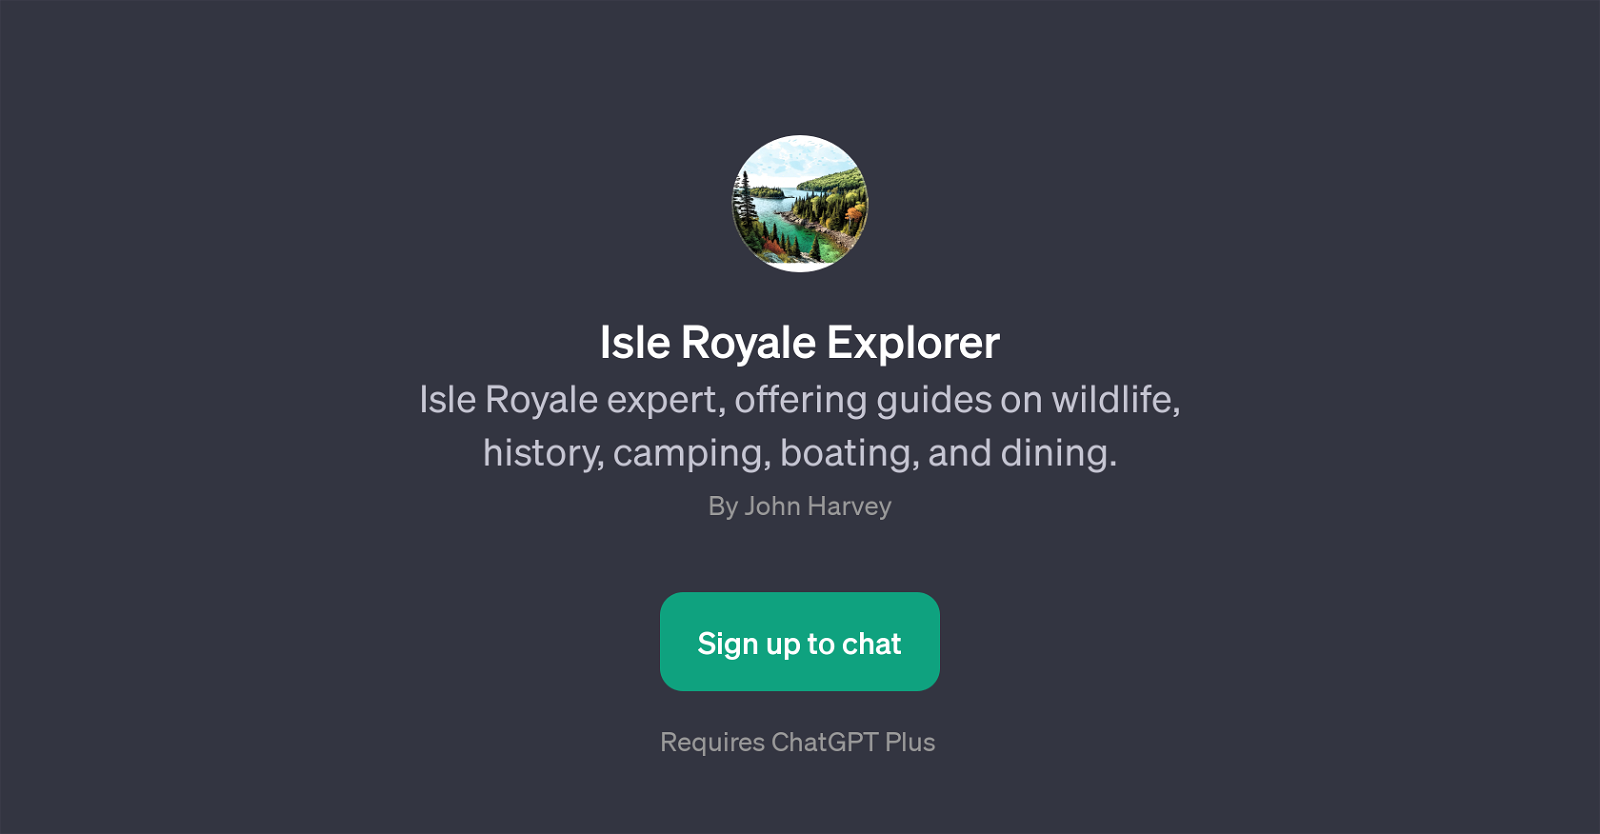 Isle Royale Explorer website